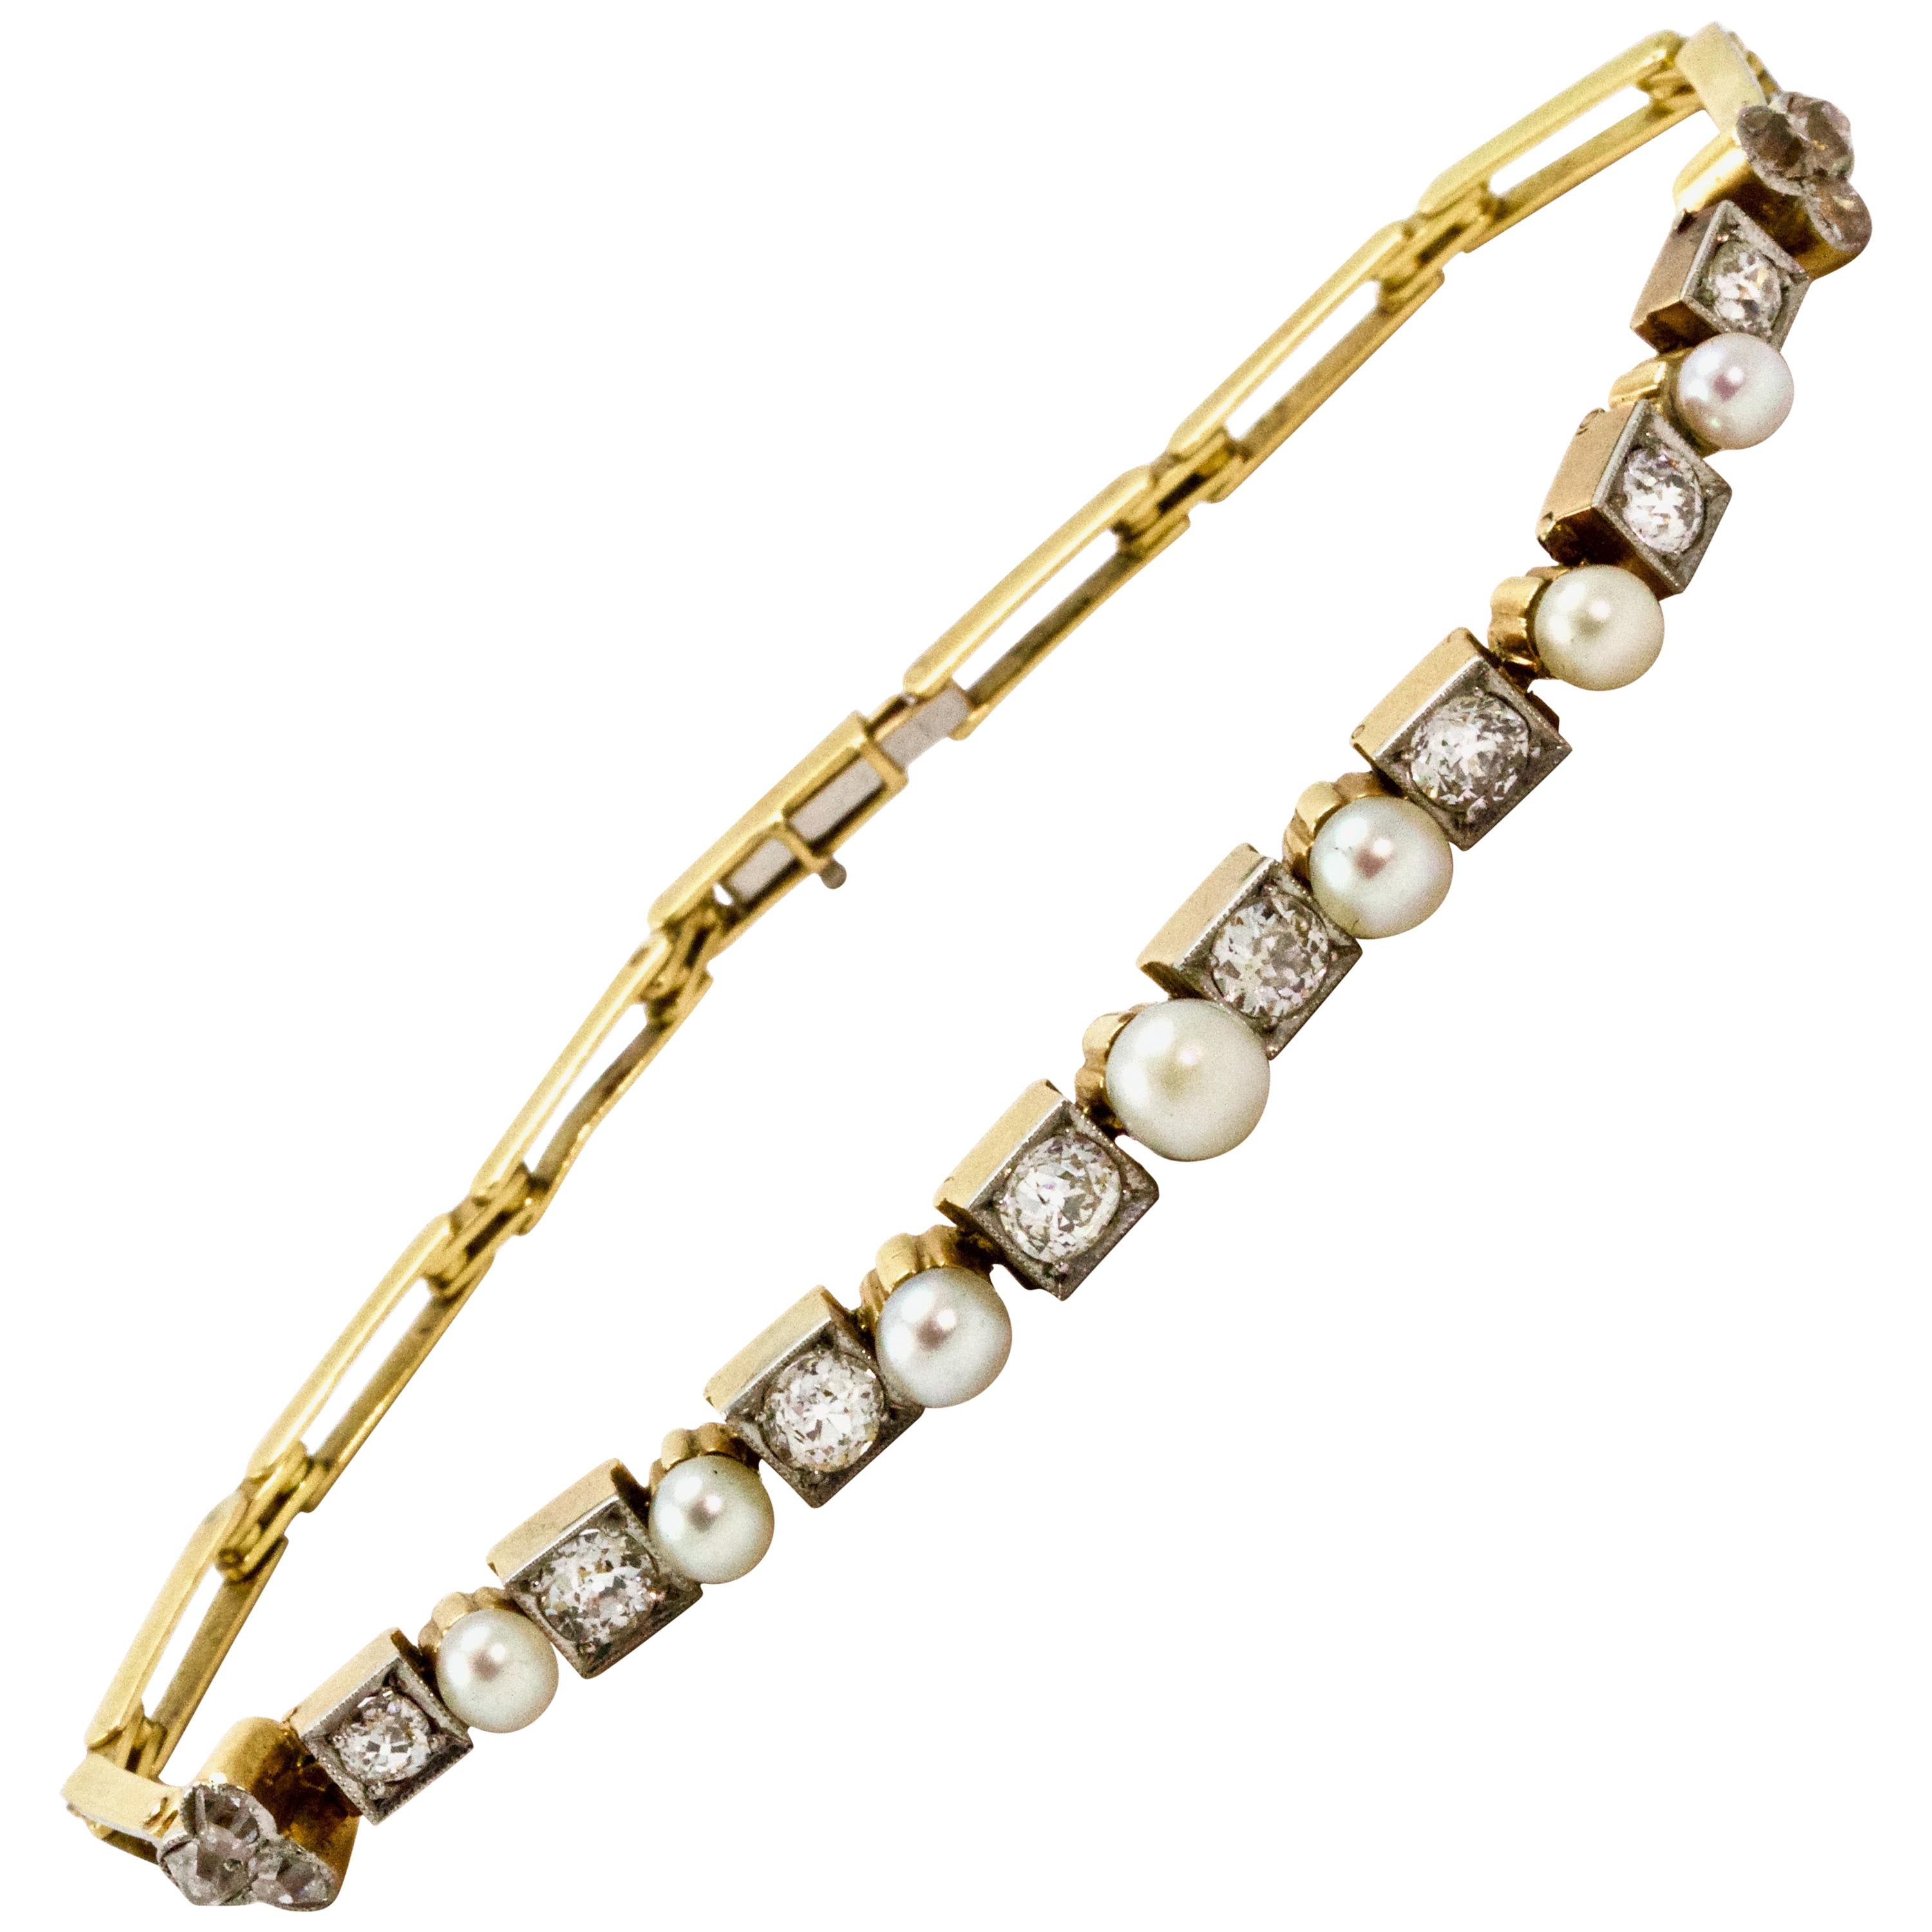 Edwardian 18 Carat Yellow Gold and Platinum Pearl and Diamond Bracelet